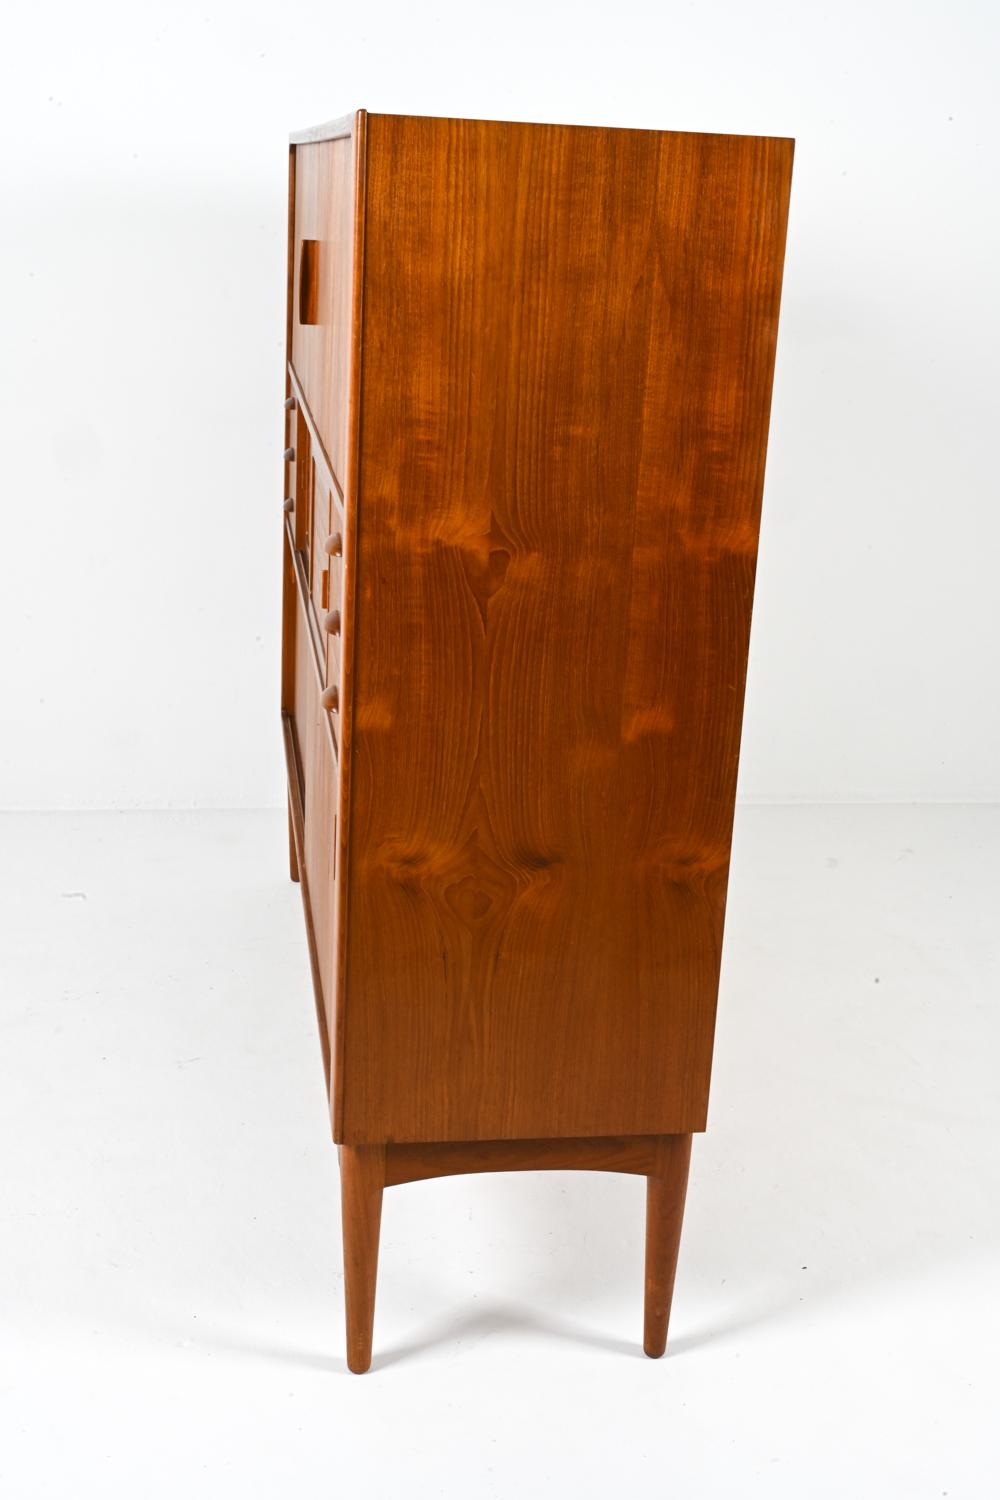 Teak Sideboard by Johannes Andersen for Uldum, Denmark 1960's For Sale 6